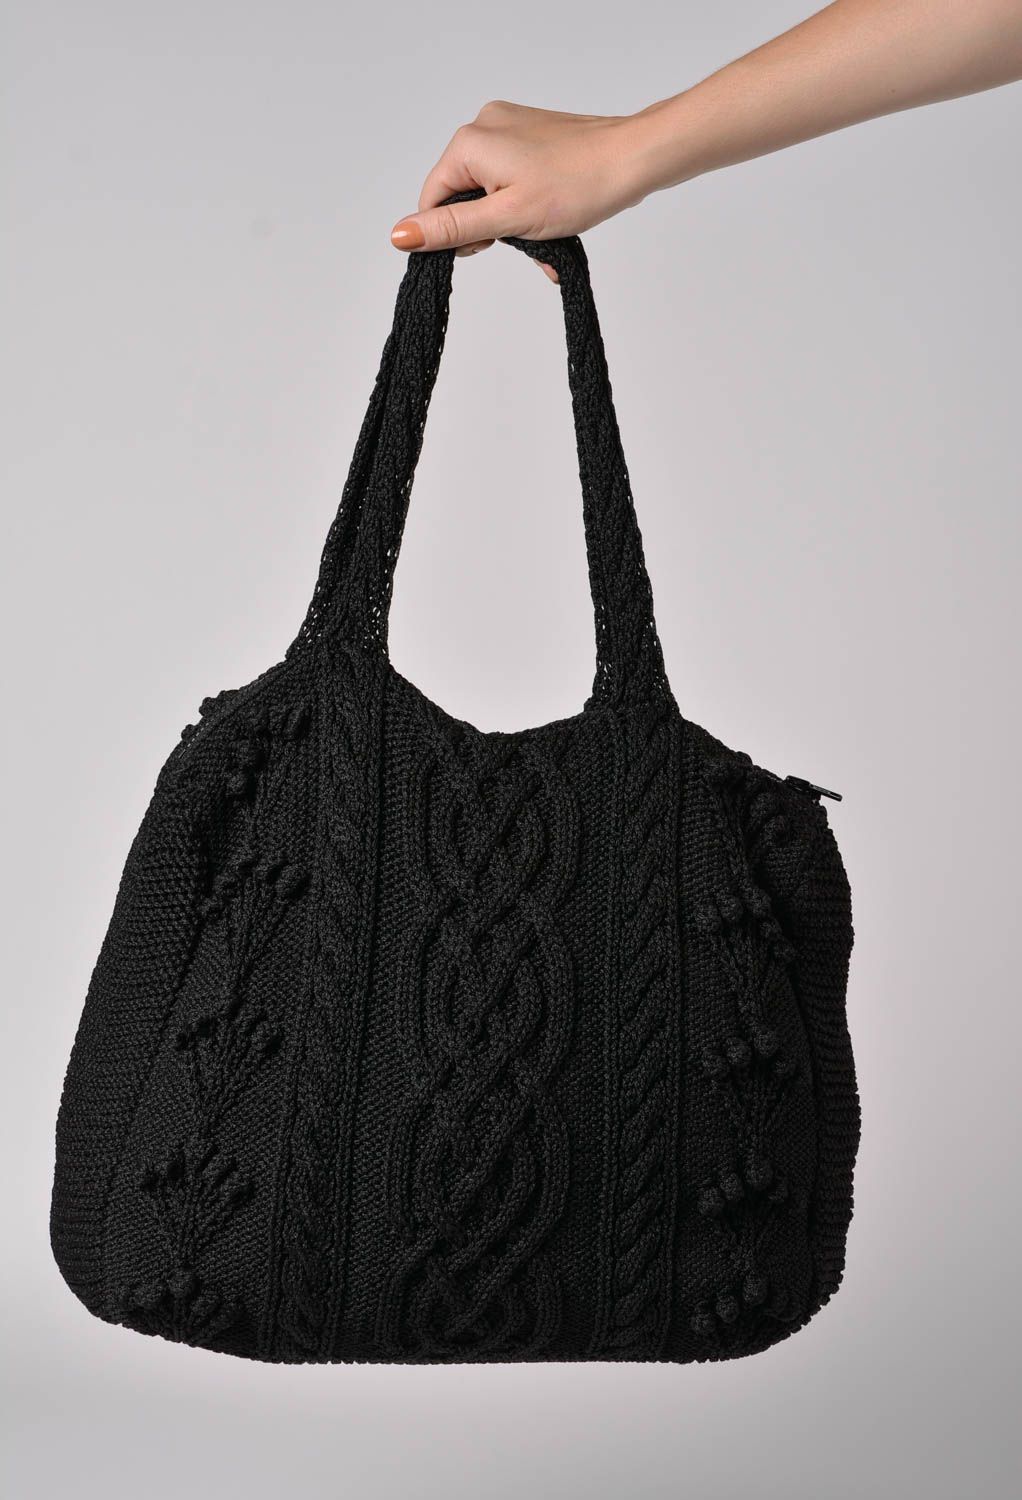 Bolso tejido con dos agujas artesanal estiloso con forro negro para mujer foto 2